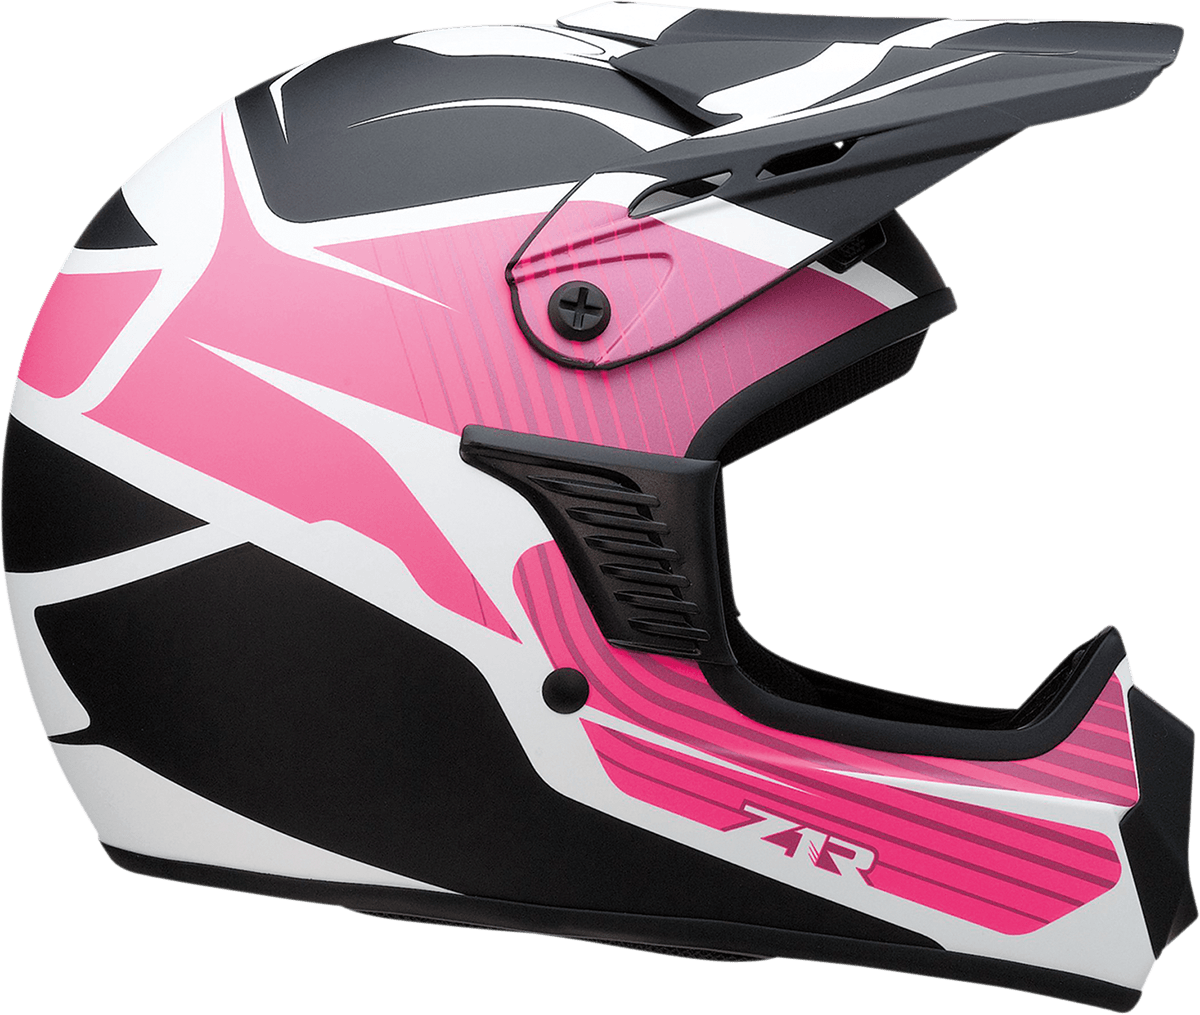 Z1R Child Rise Helmet - Flame - Pink - L/XL 0111-1438